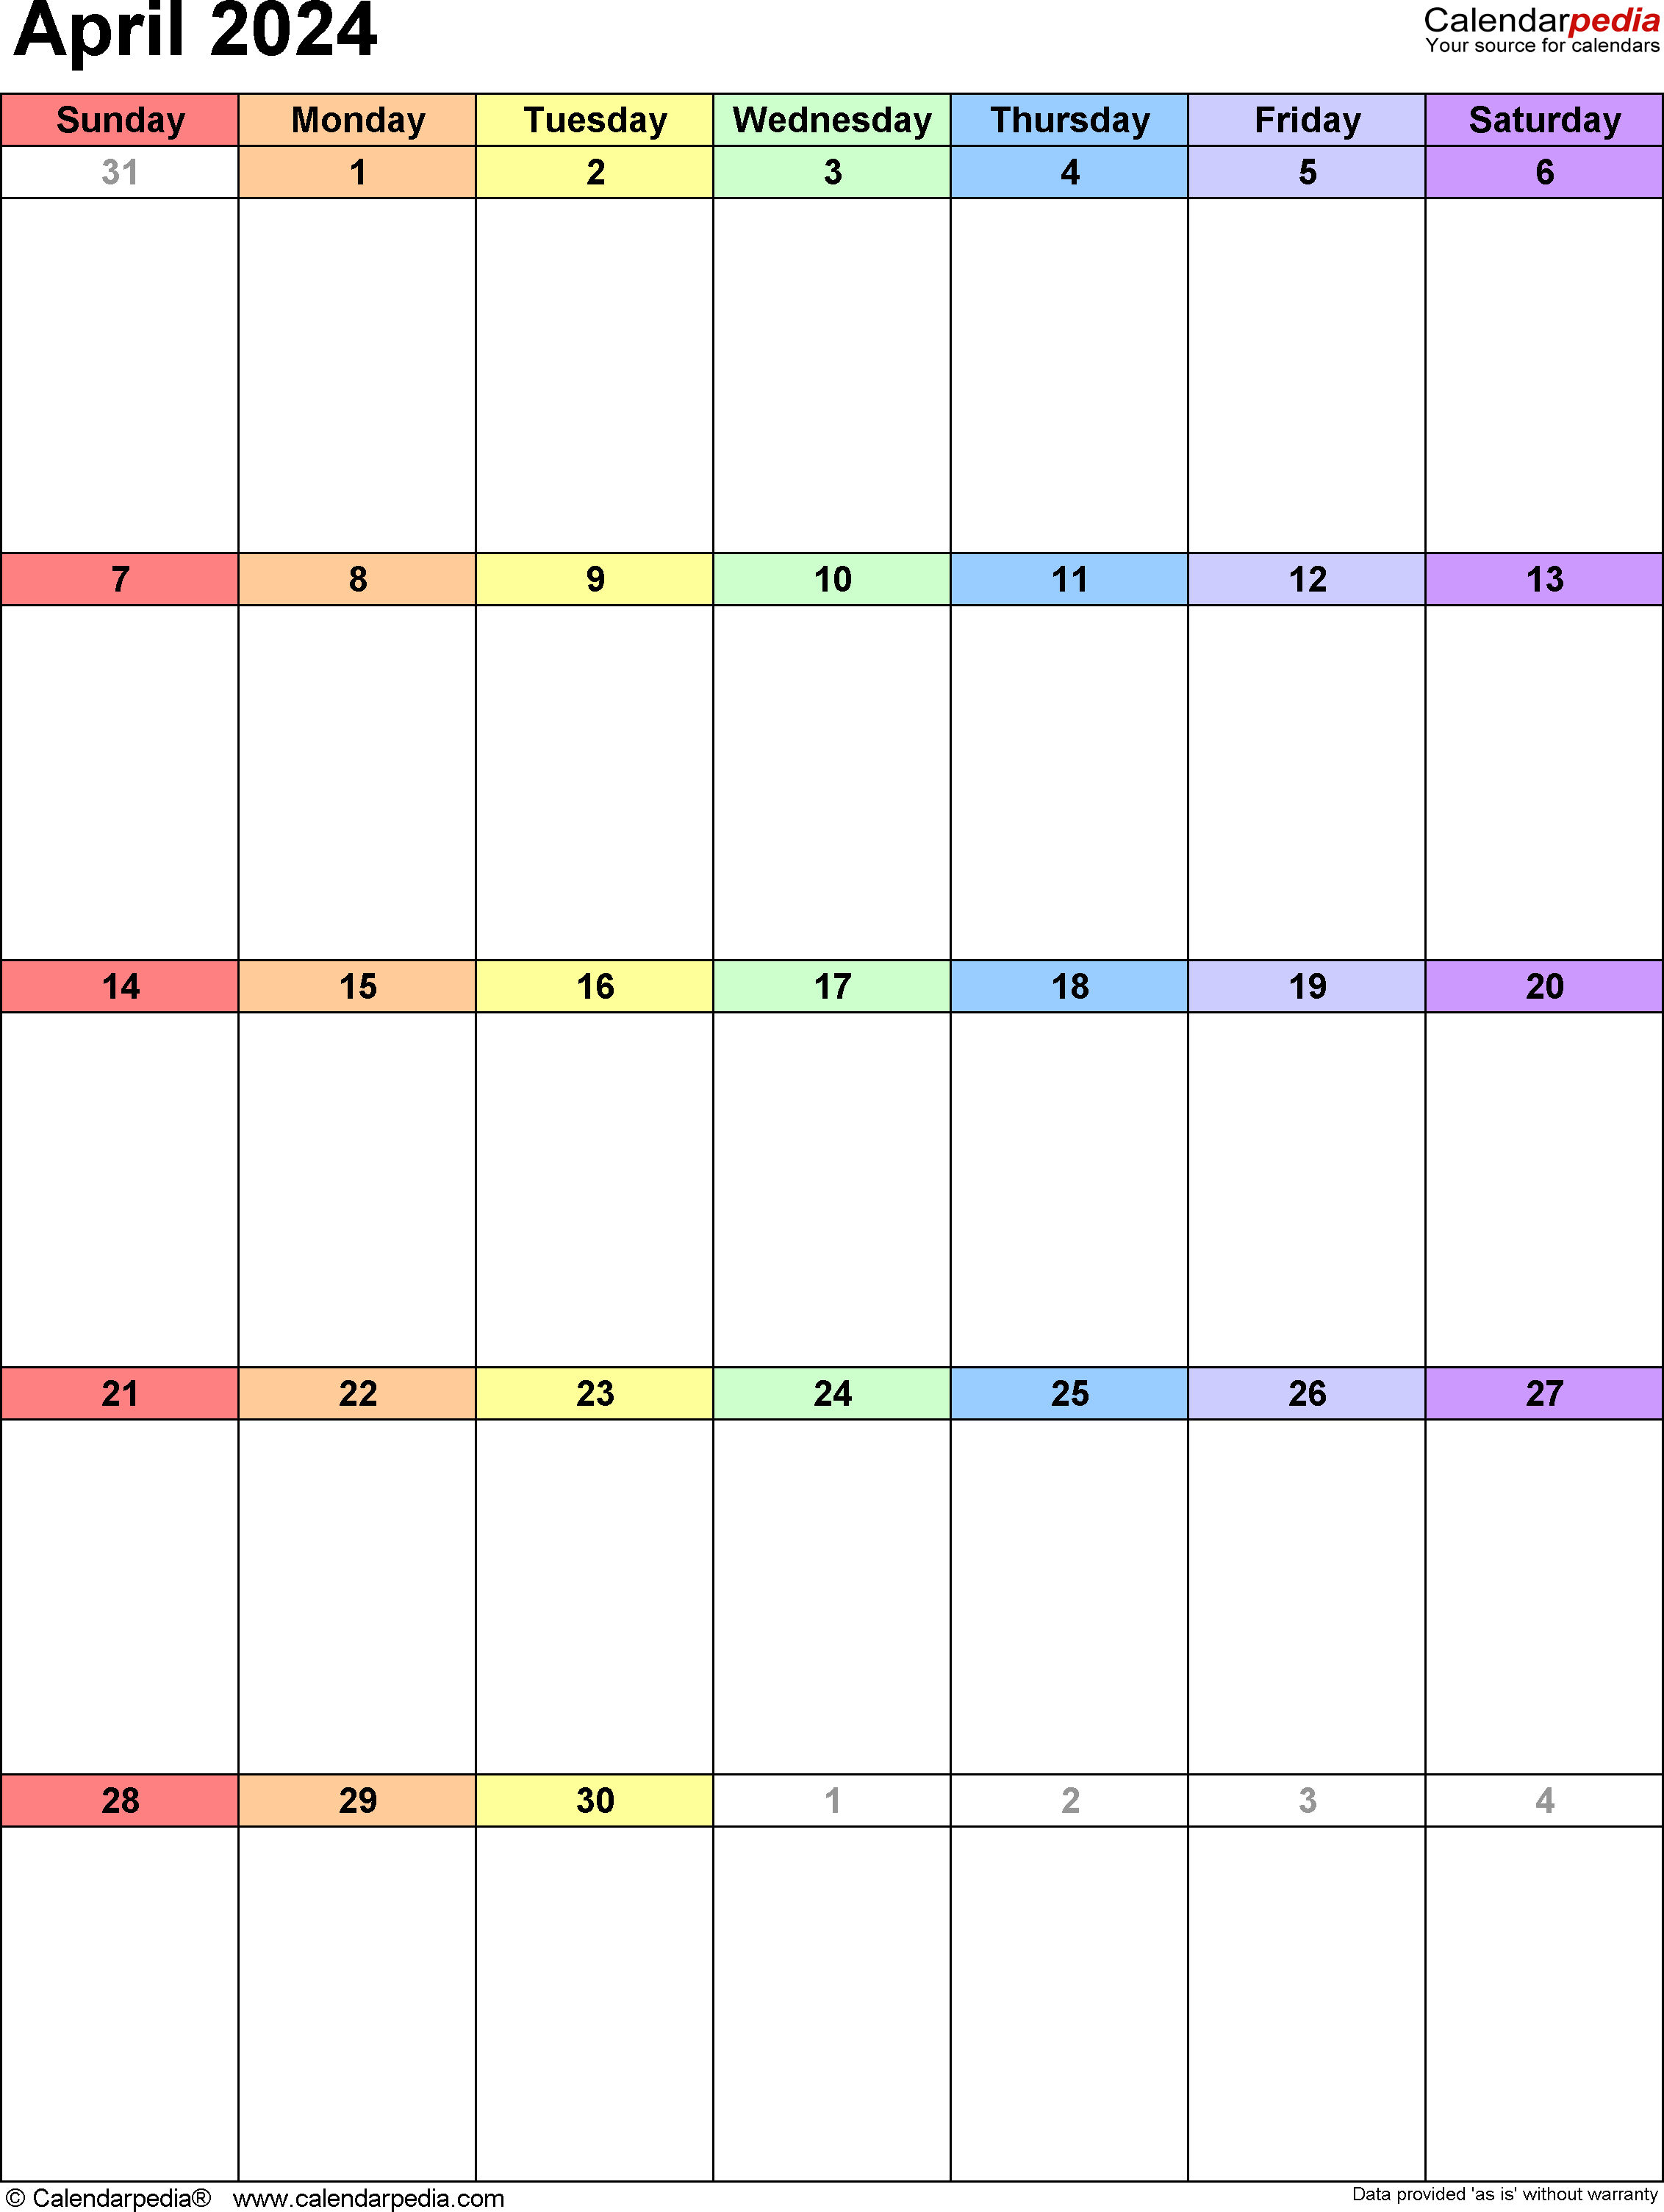 April 2024 Calendar | Templates For Word, Excel And Pdf pertaining to April Editable Calendar 2024